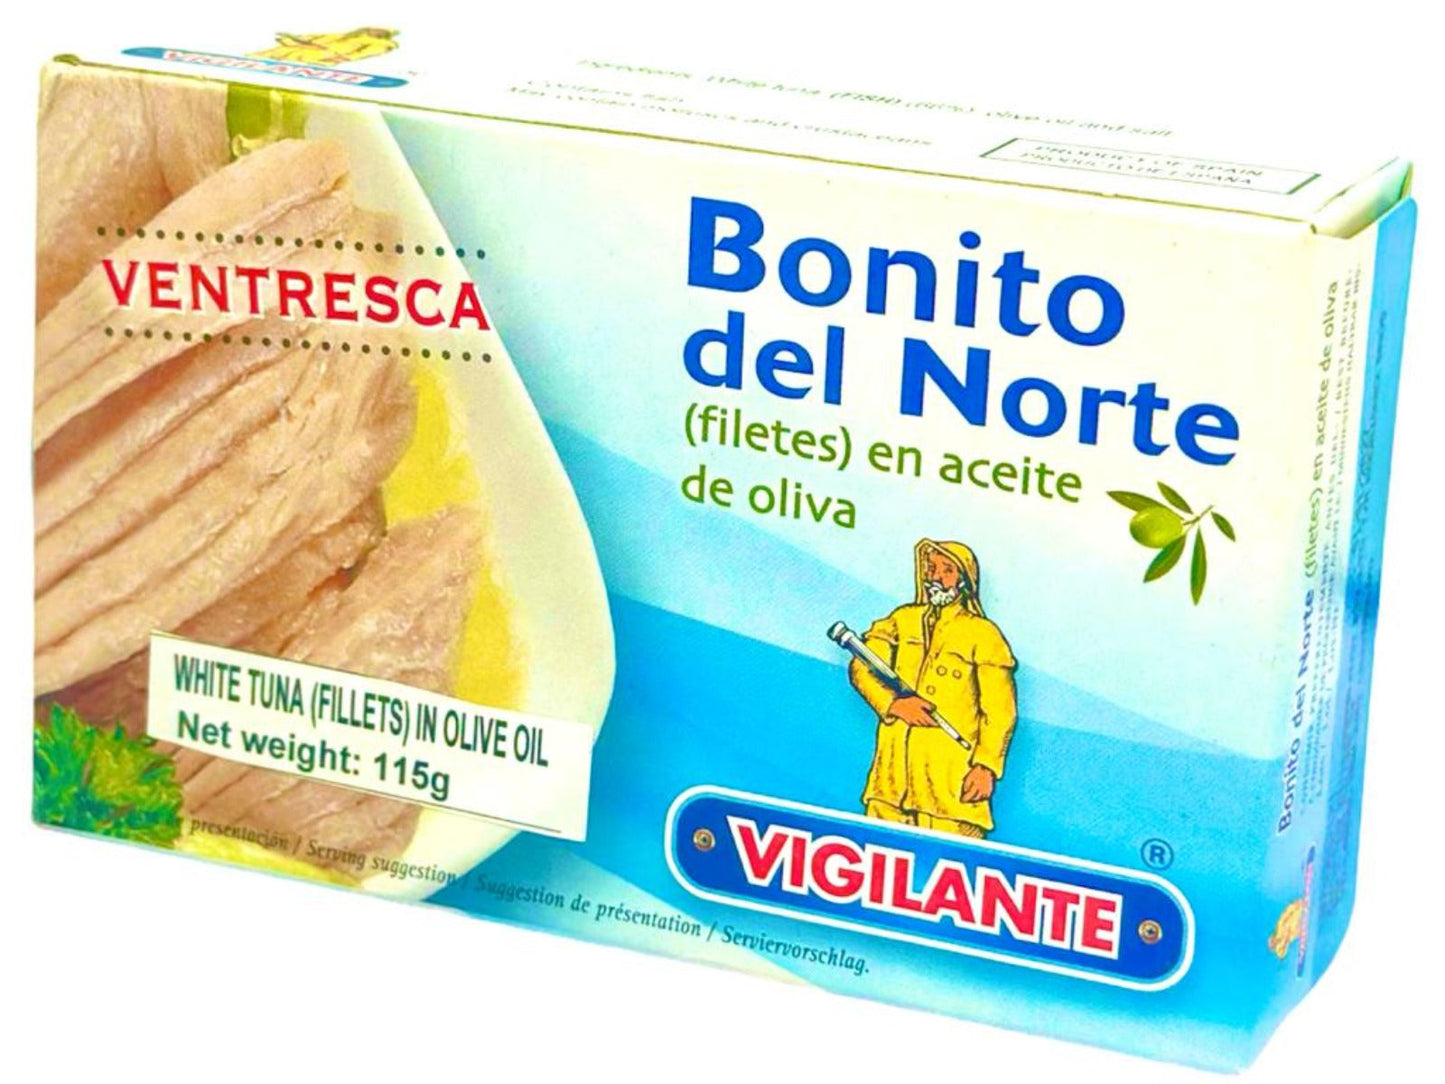 Vigilante Bonito del Norte Filetes en Aceite de Oliva  - Spanish White Tuna Fillets in Olive Oil 115g - 4 Pack Total 640g Best Before Jan 2027